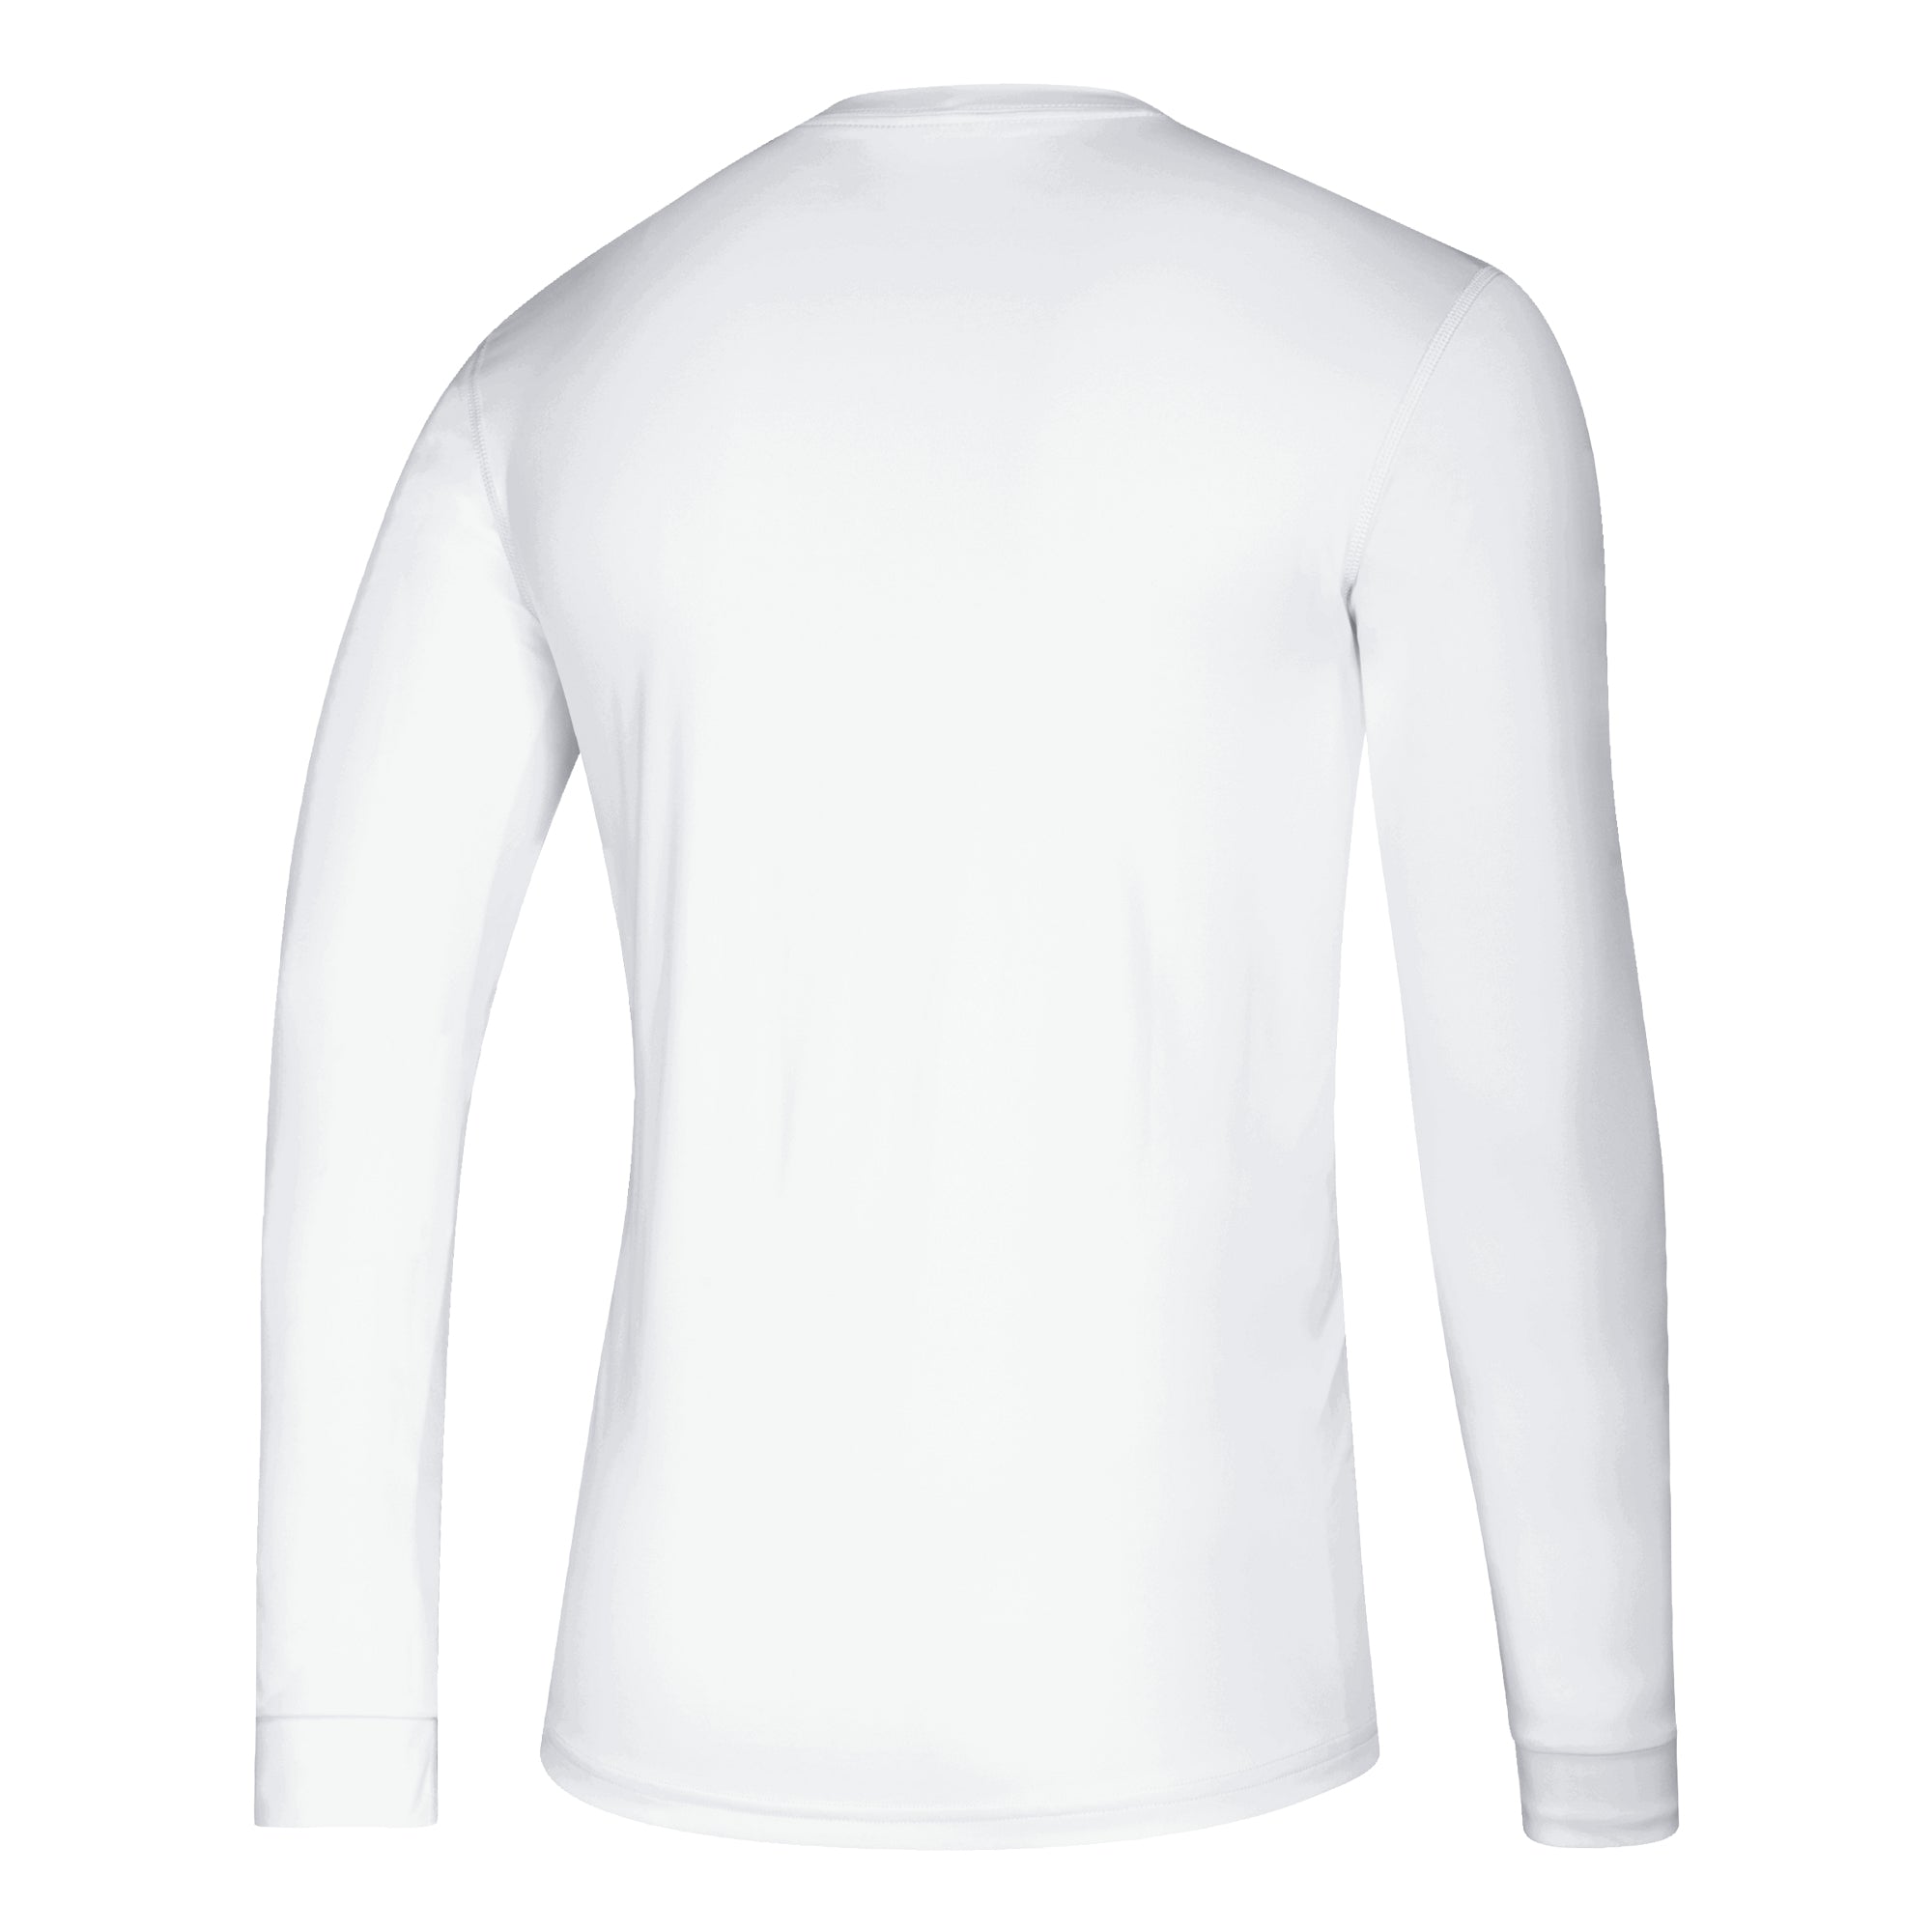 Inter Miami CF 2021 adidas Creator L/S Men's Three Stripes T-Shirt - White